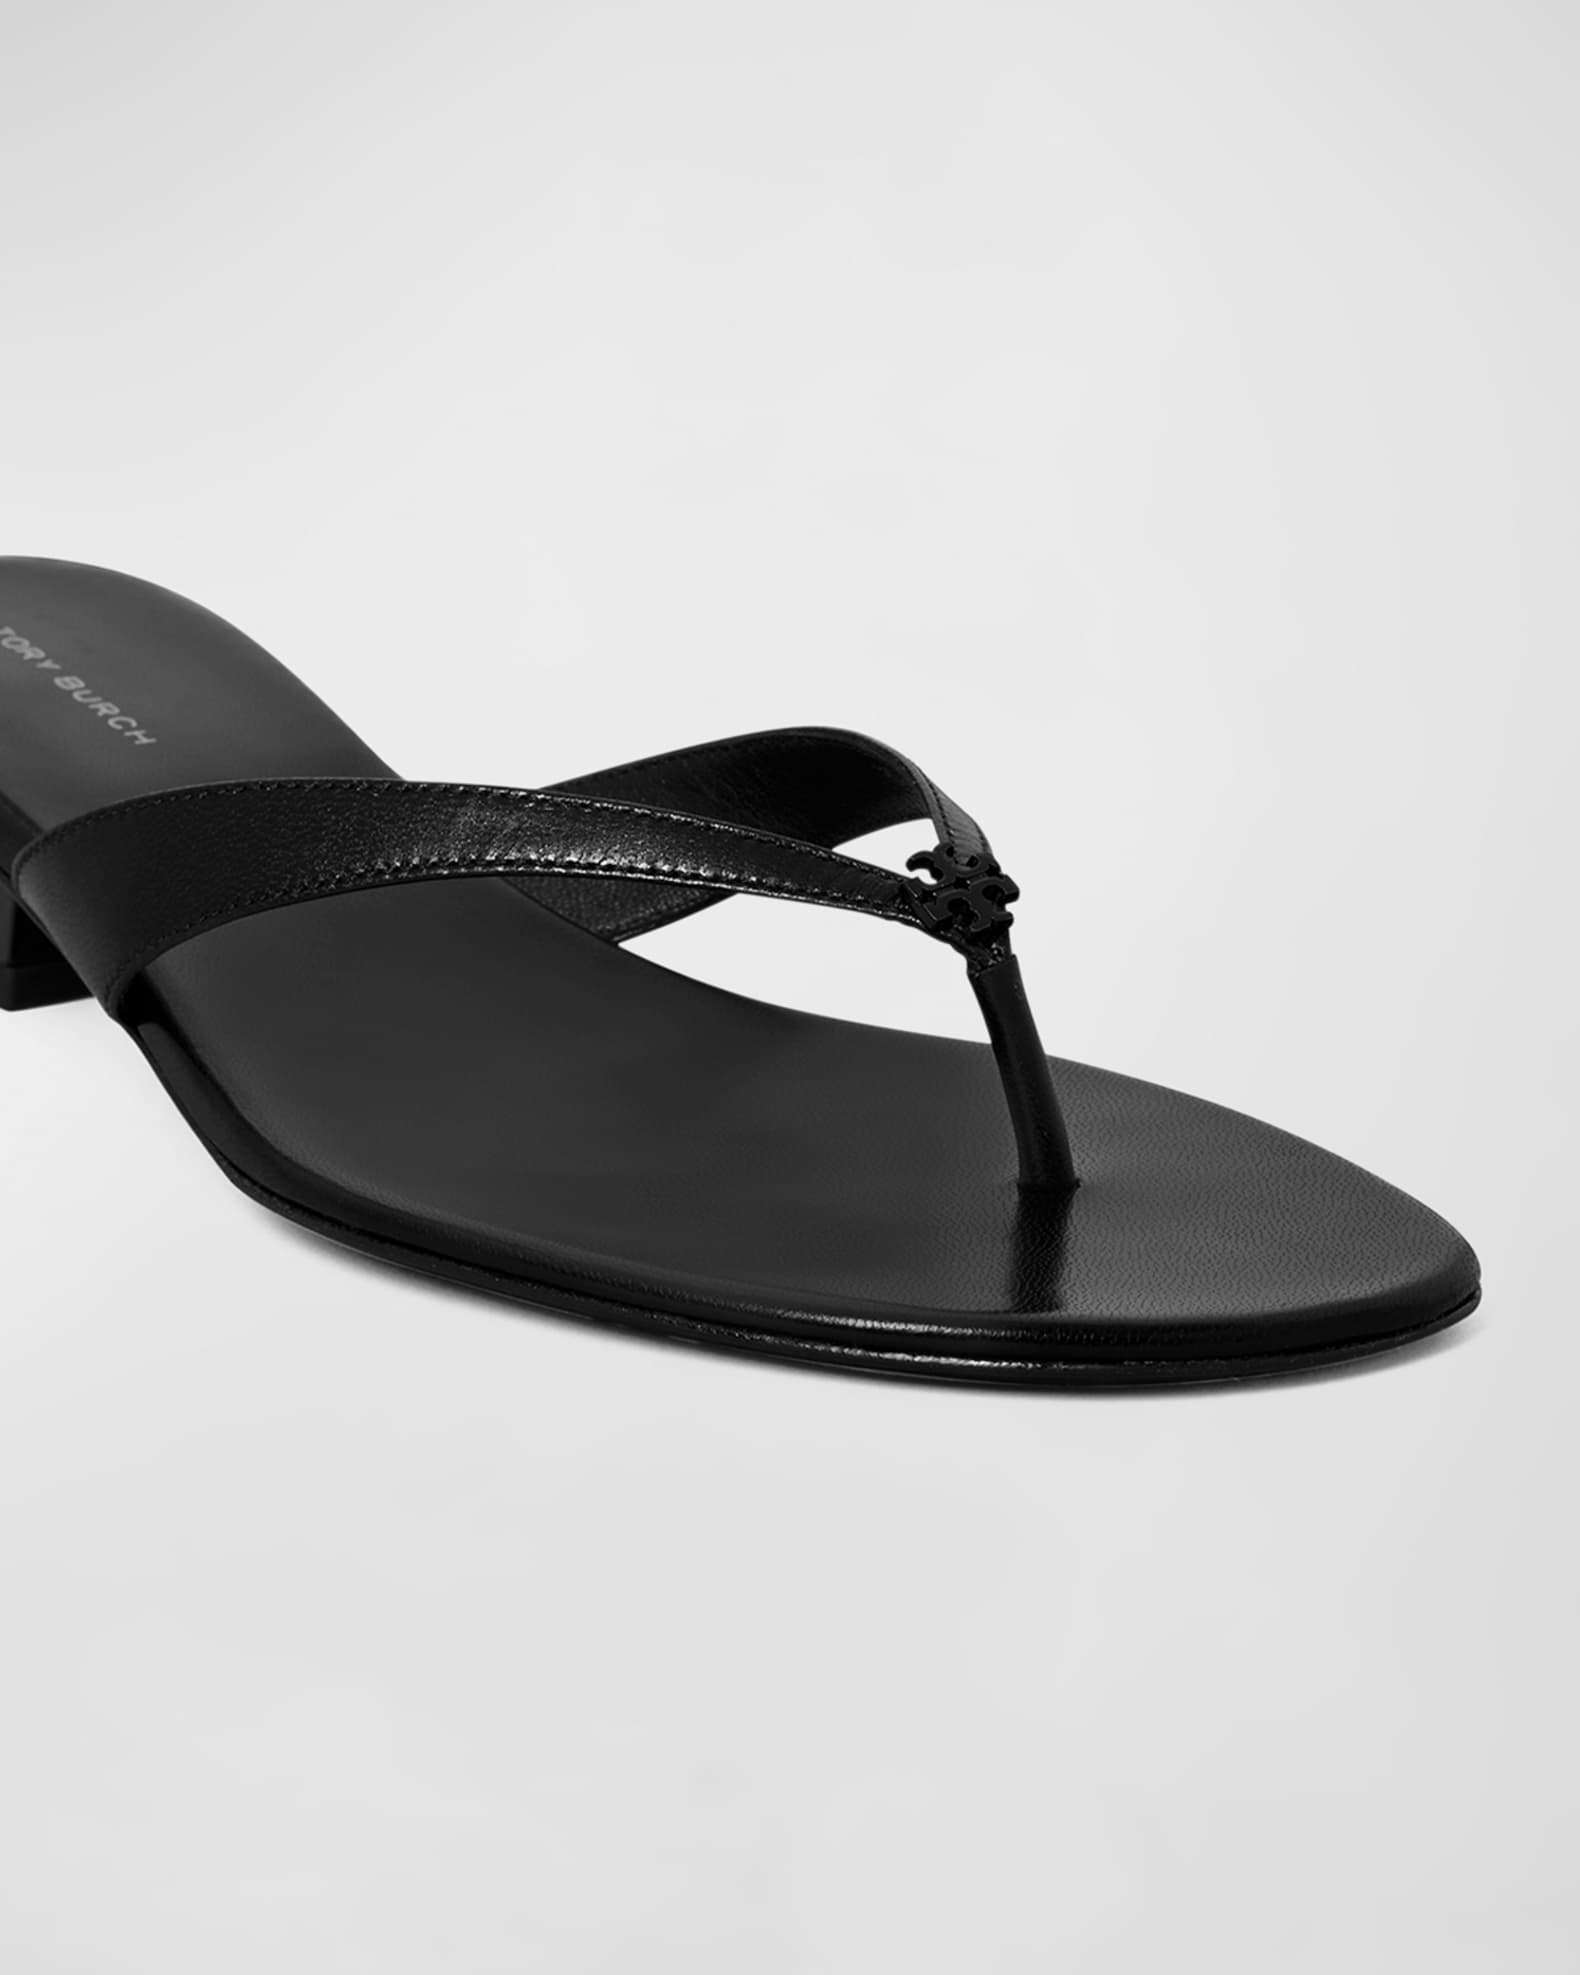 Tory Burch Capri Leather Kitten-Heel Thong Sandals | Neiman Marcus